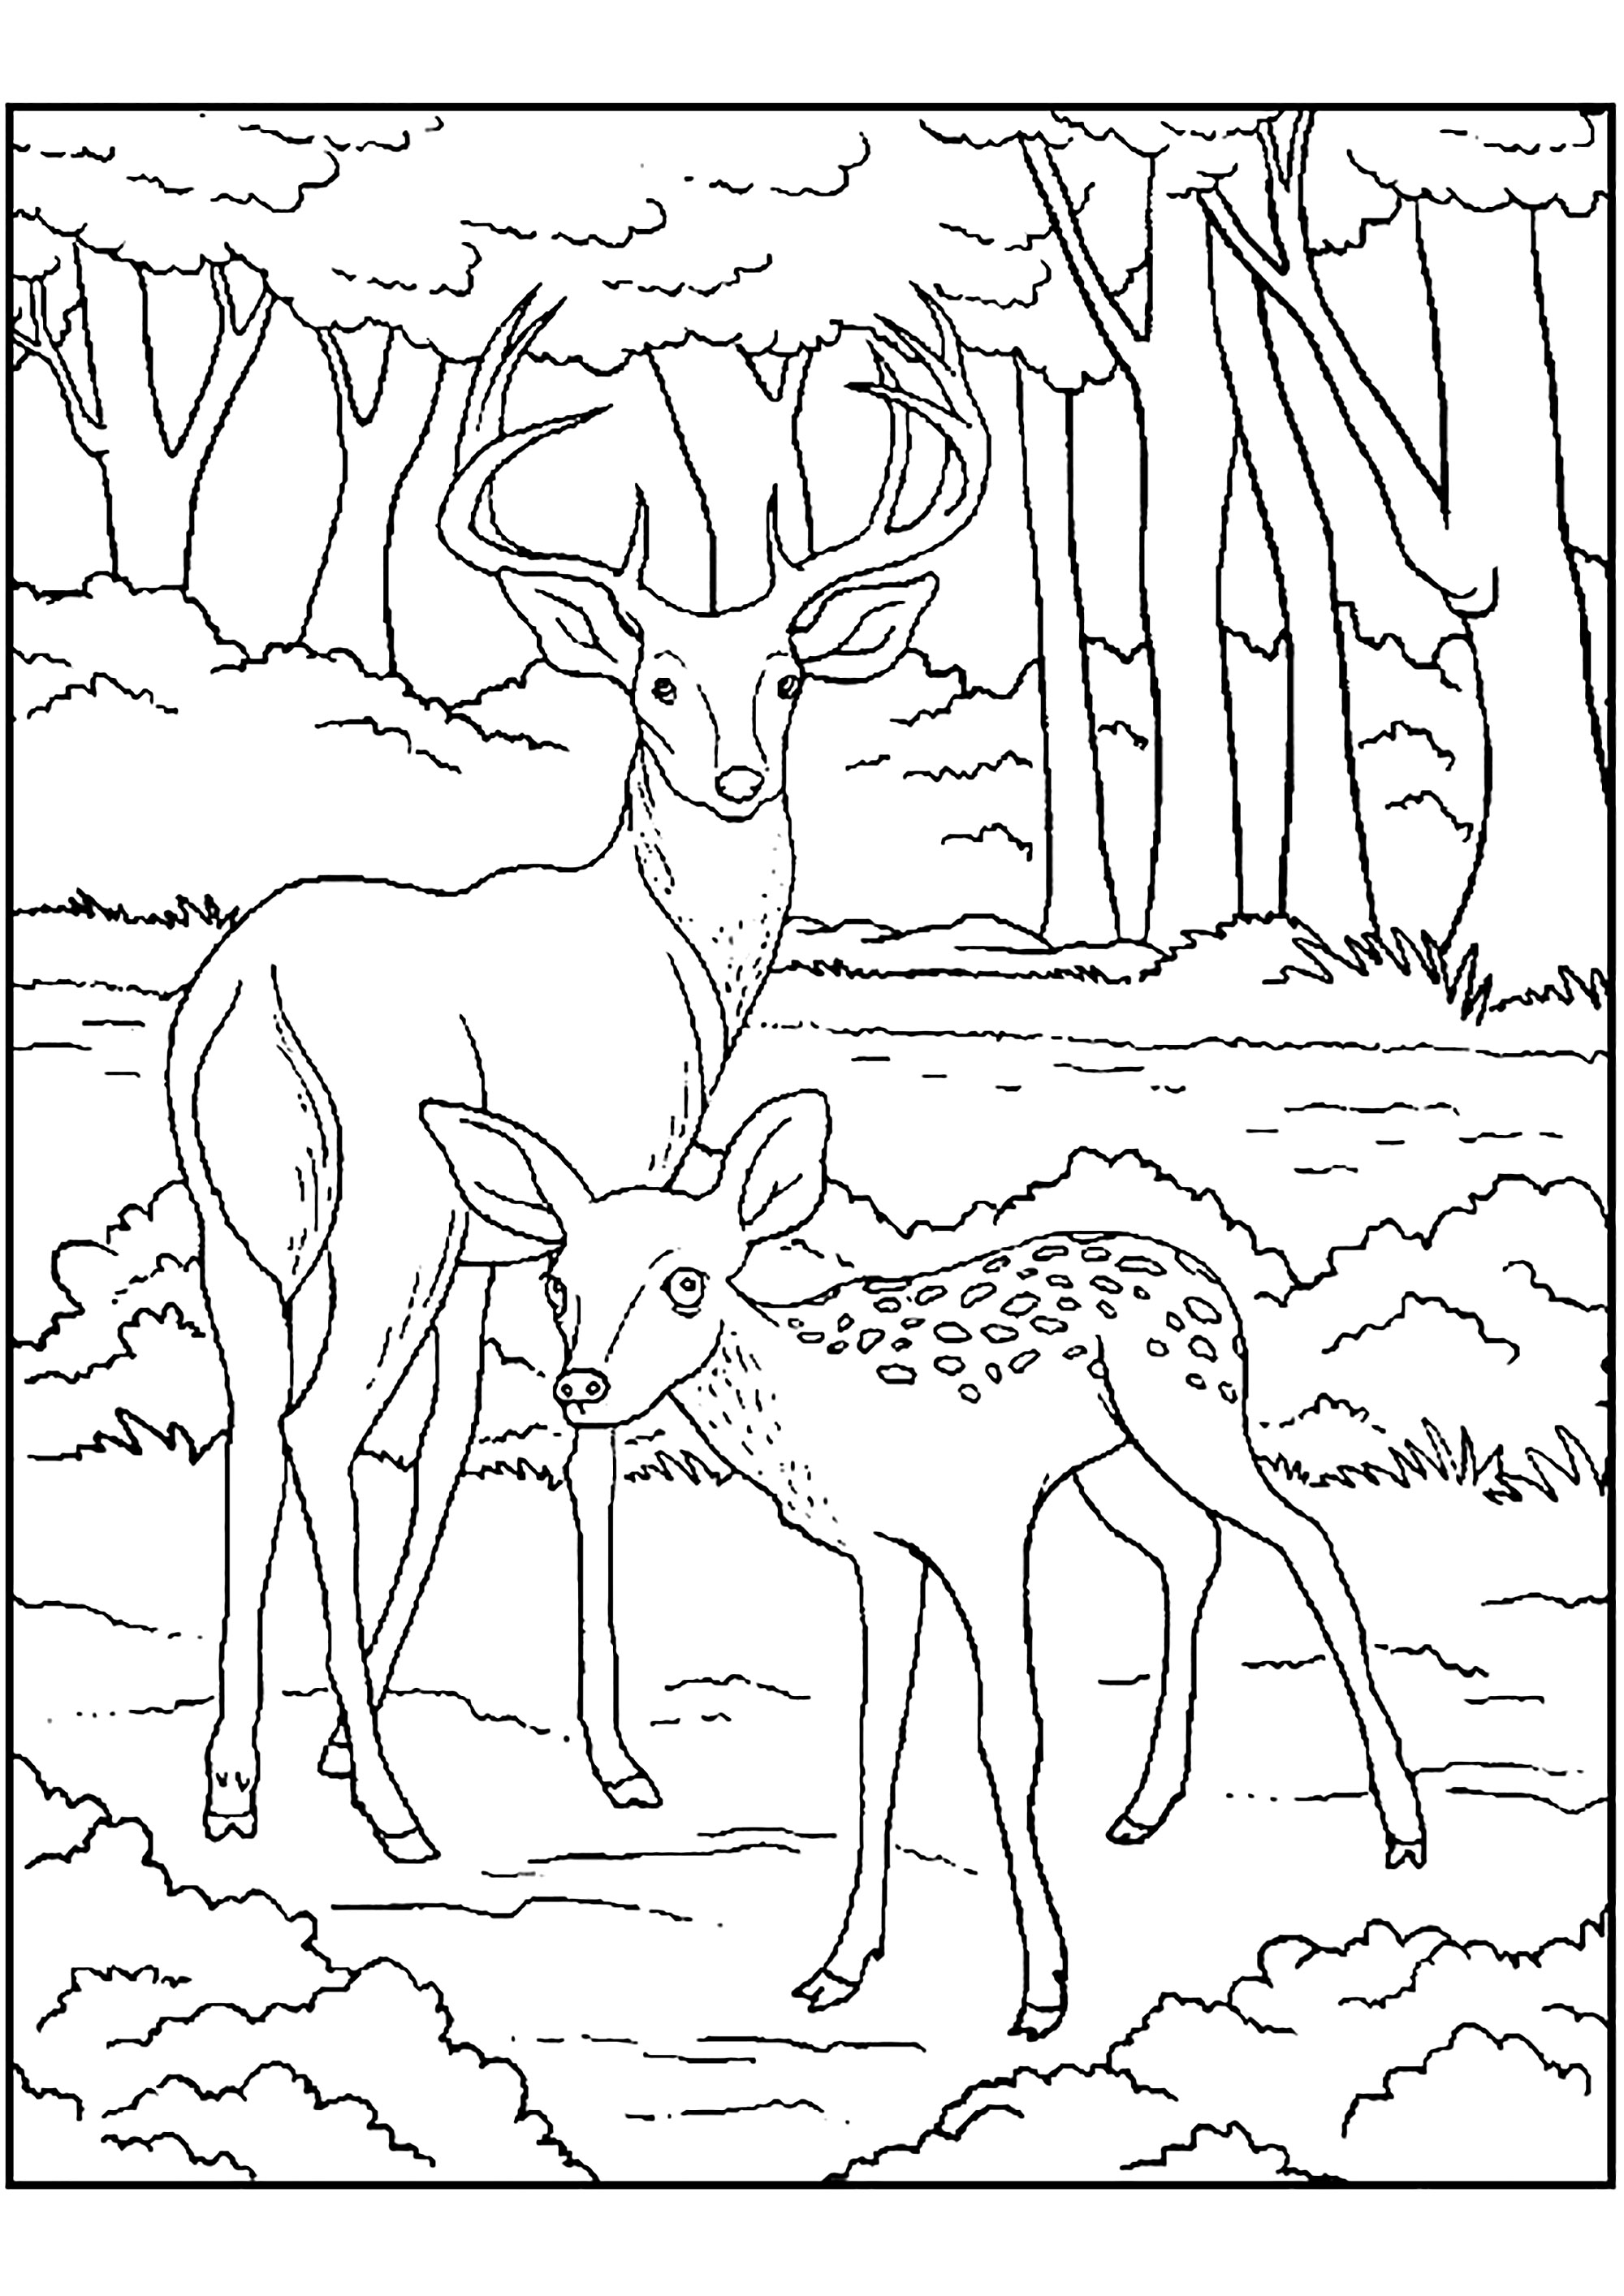 Simple Deers coloring page for kids